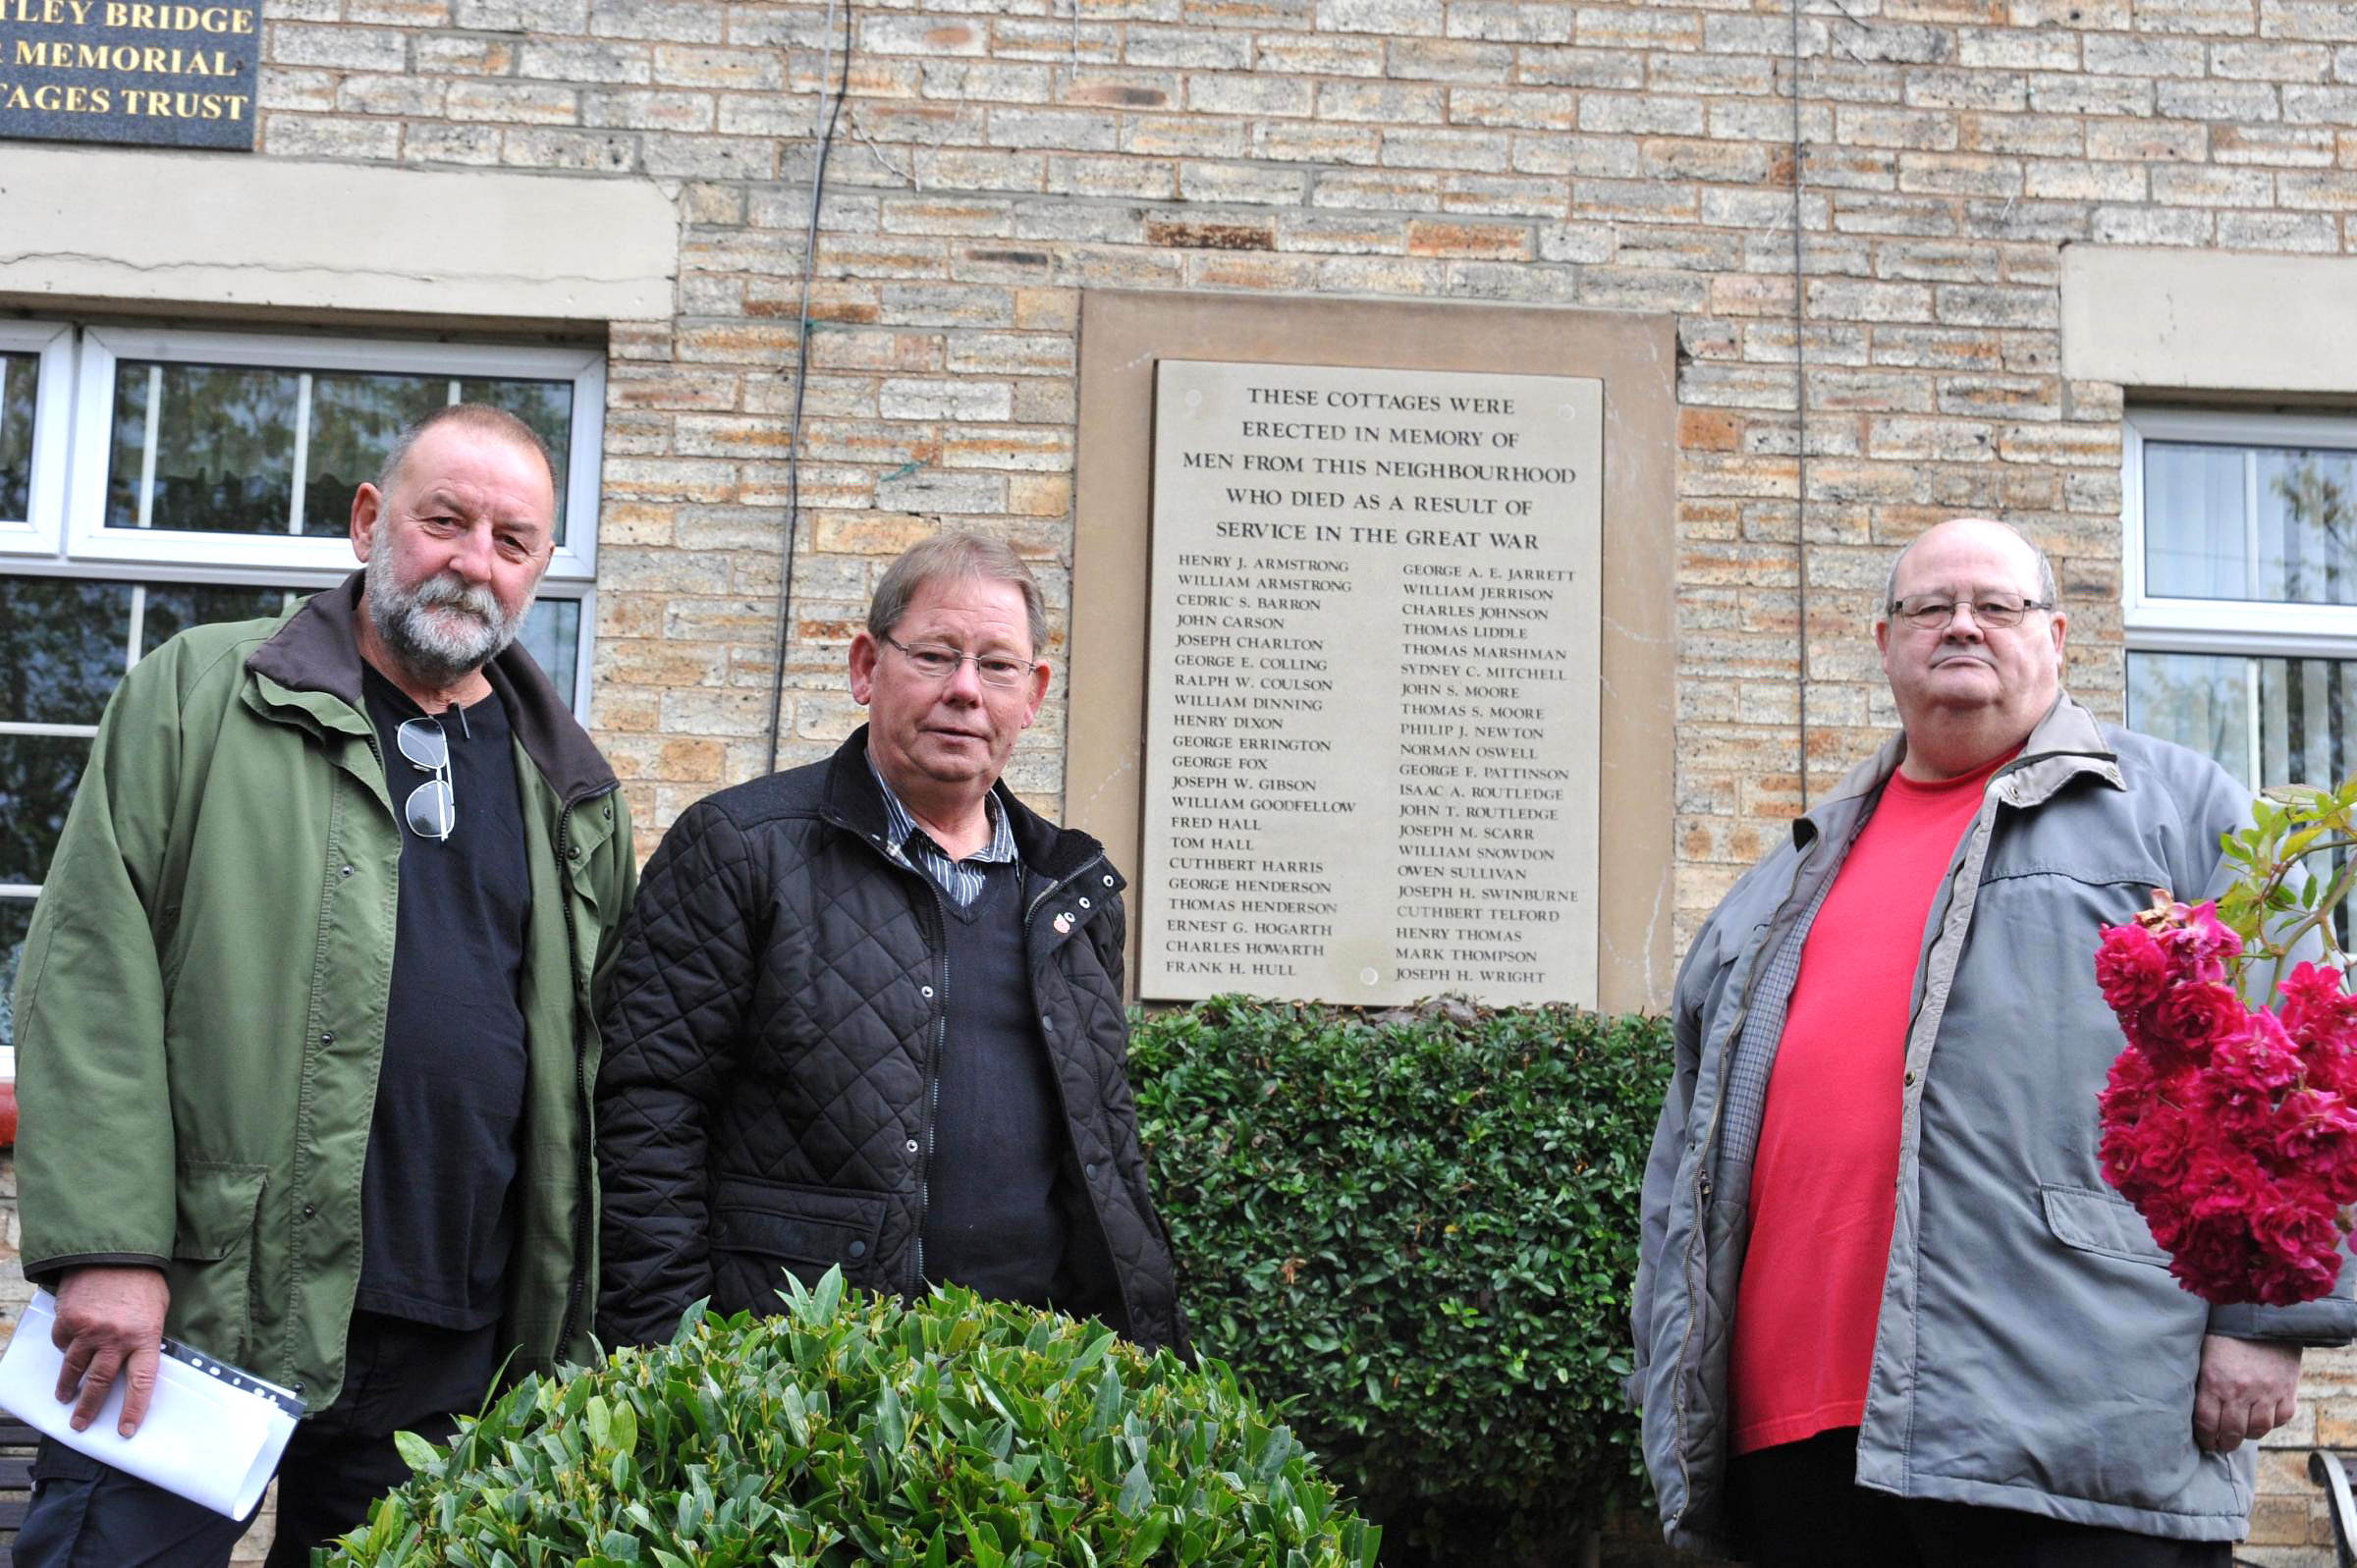 Another 15 servicemen added to village memorial to mark anniversary of First World War